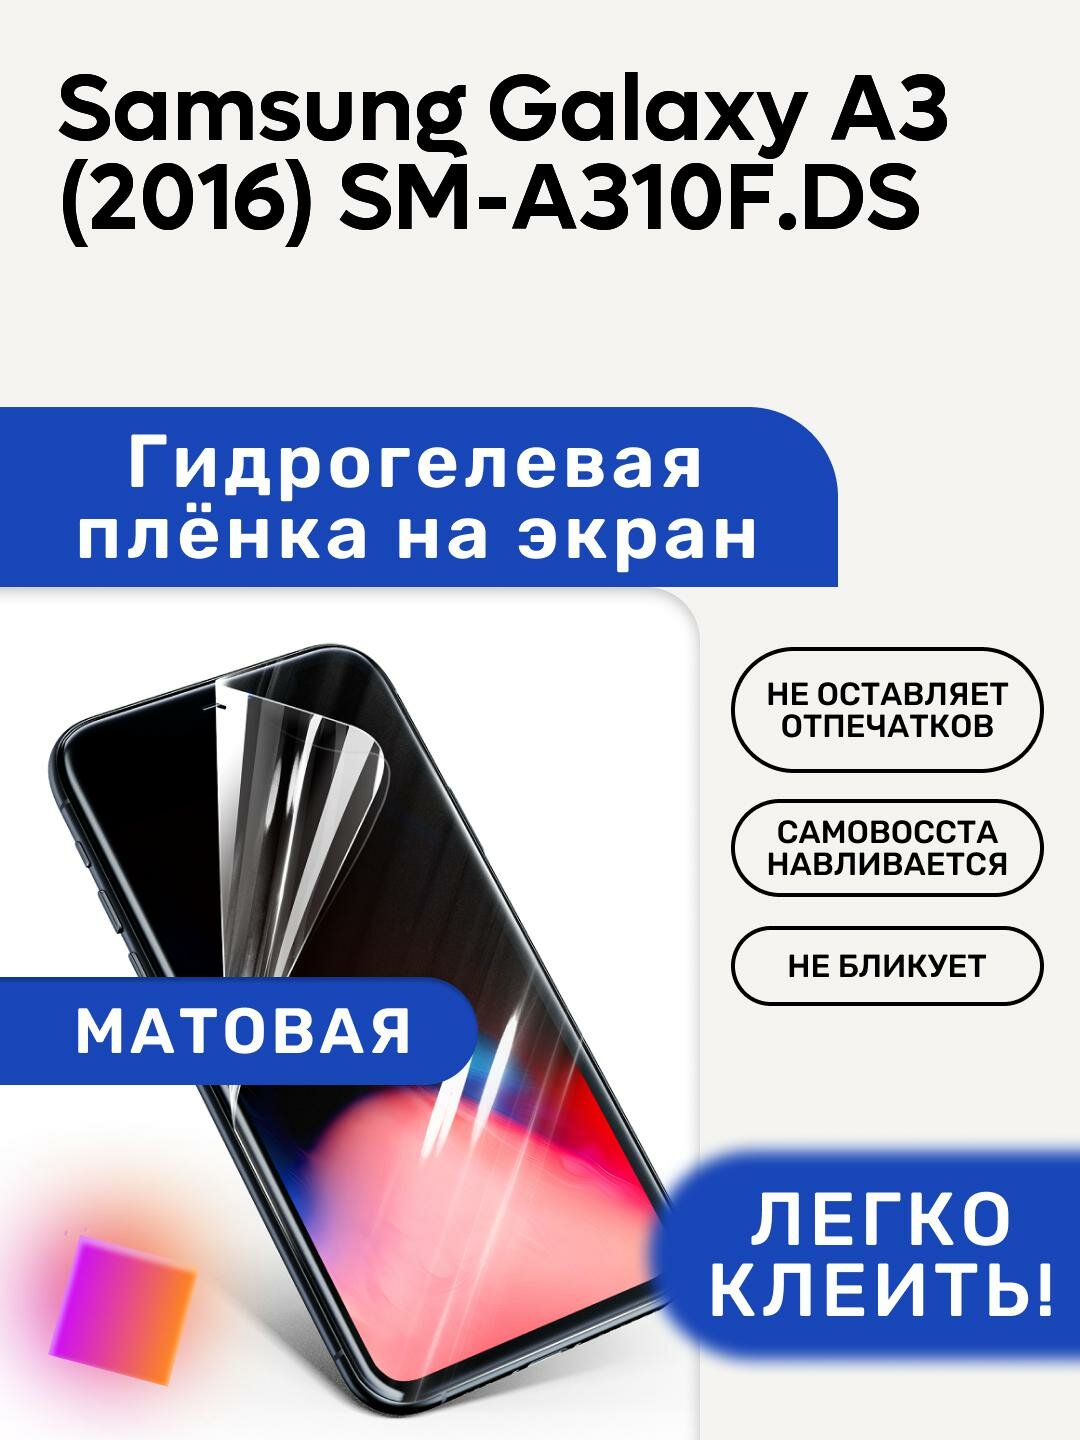 Матовая Гидрогелевая плёнка, полиуретановая, защита экрана Samsung Galaxy A3 (2016) SM-A310F/DS